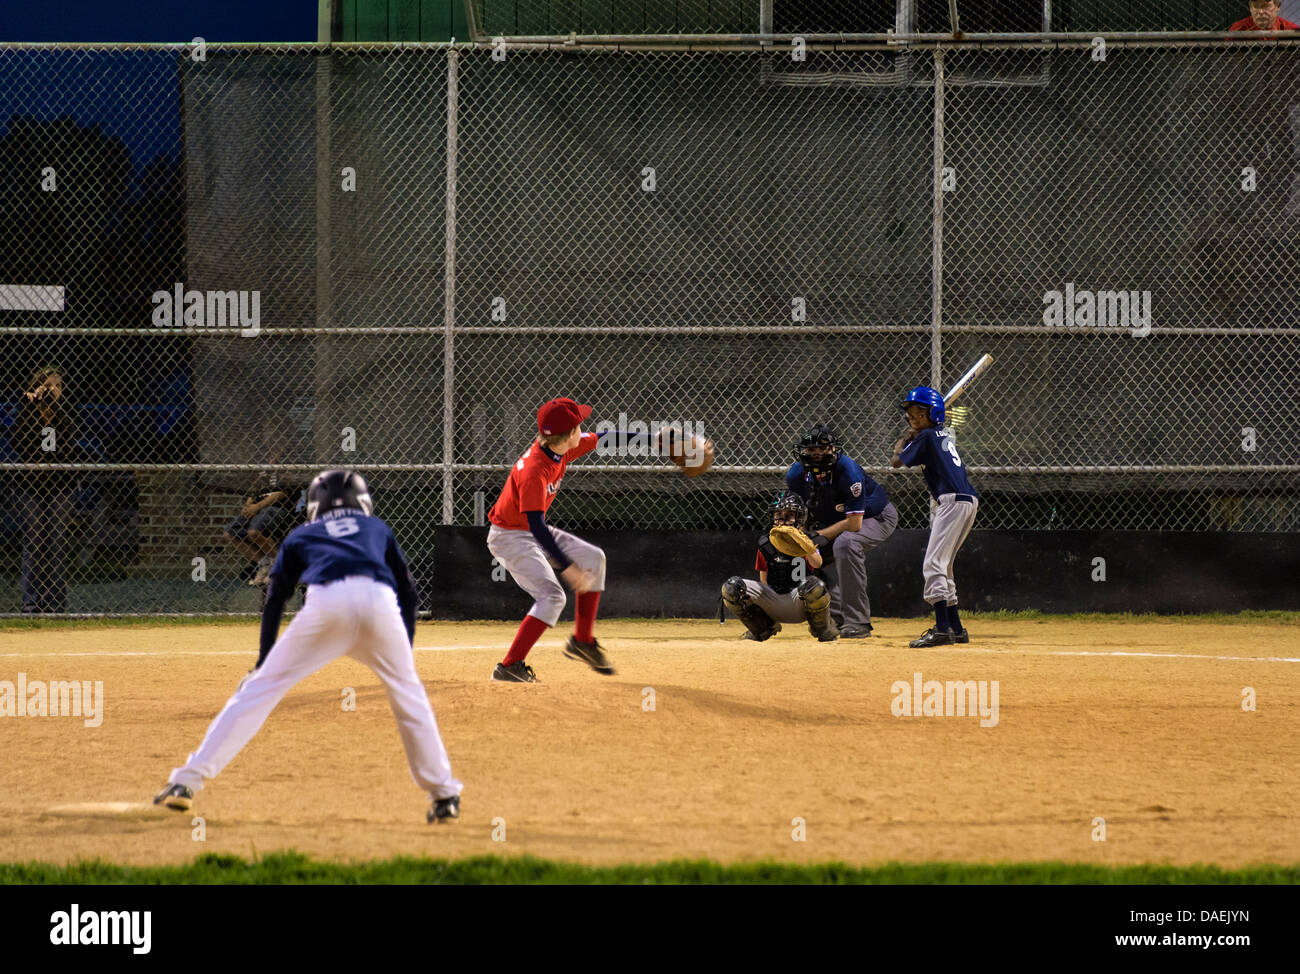 Little League baseball game at night, Delaware, USA Stock Photo